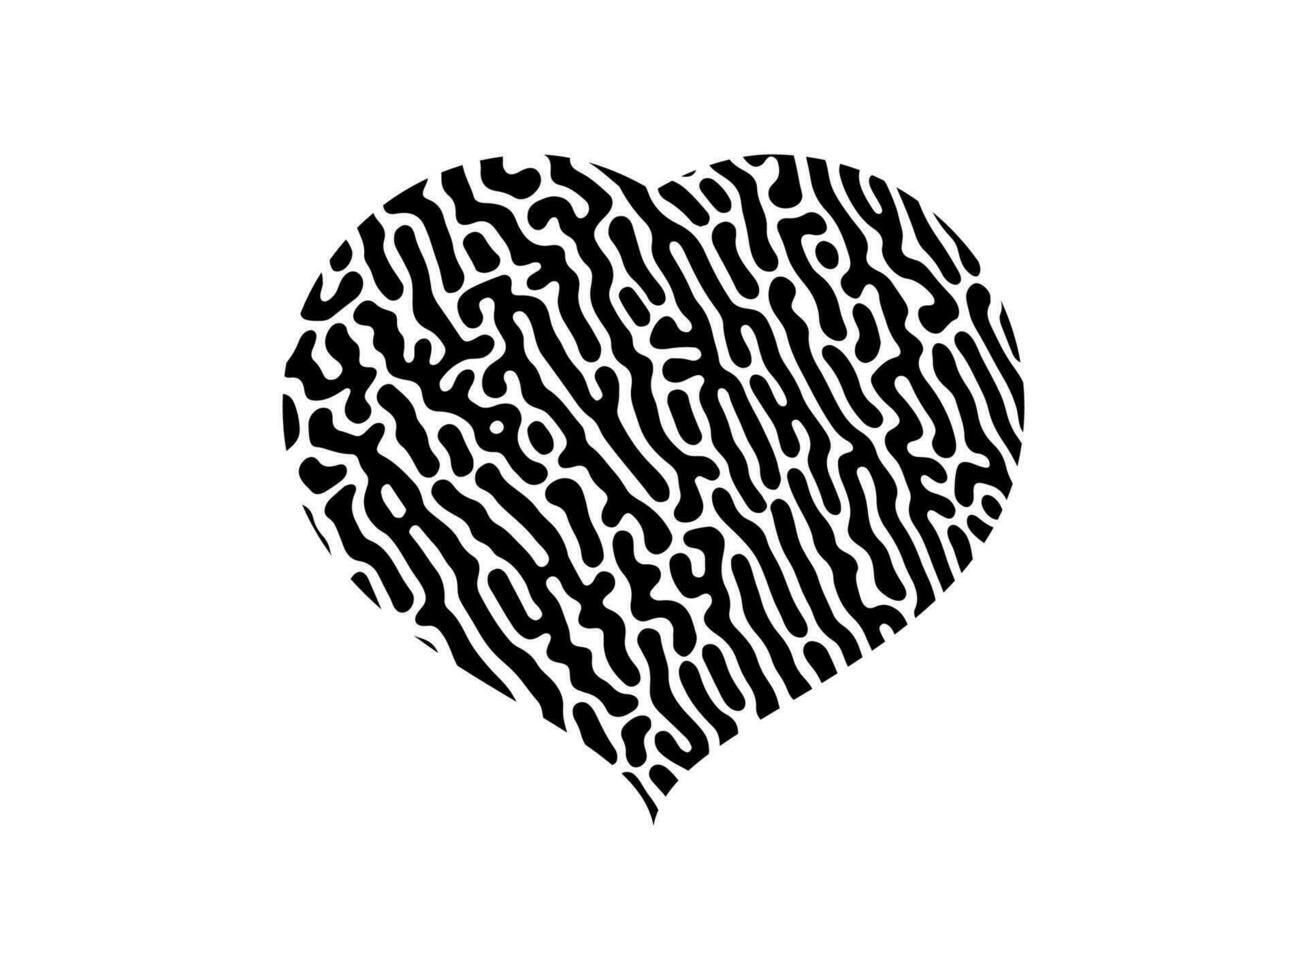 impronta digitale cuore silhouette vettore